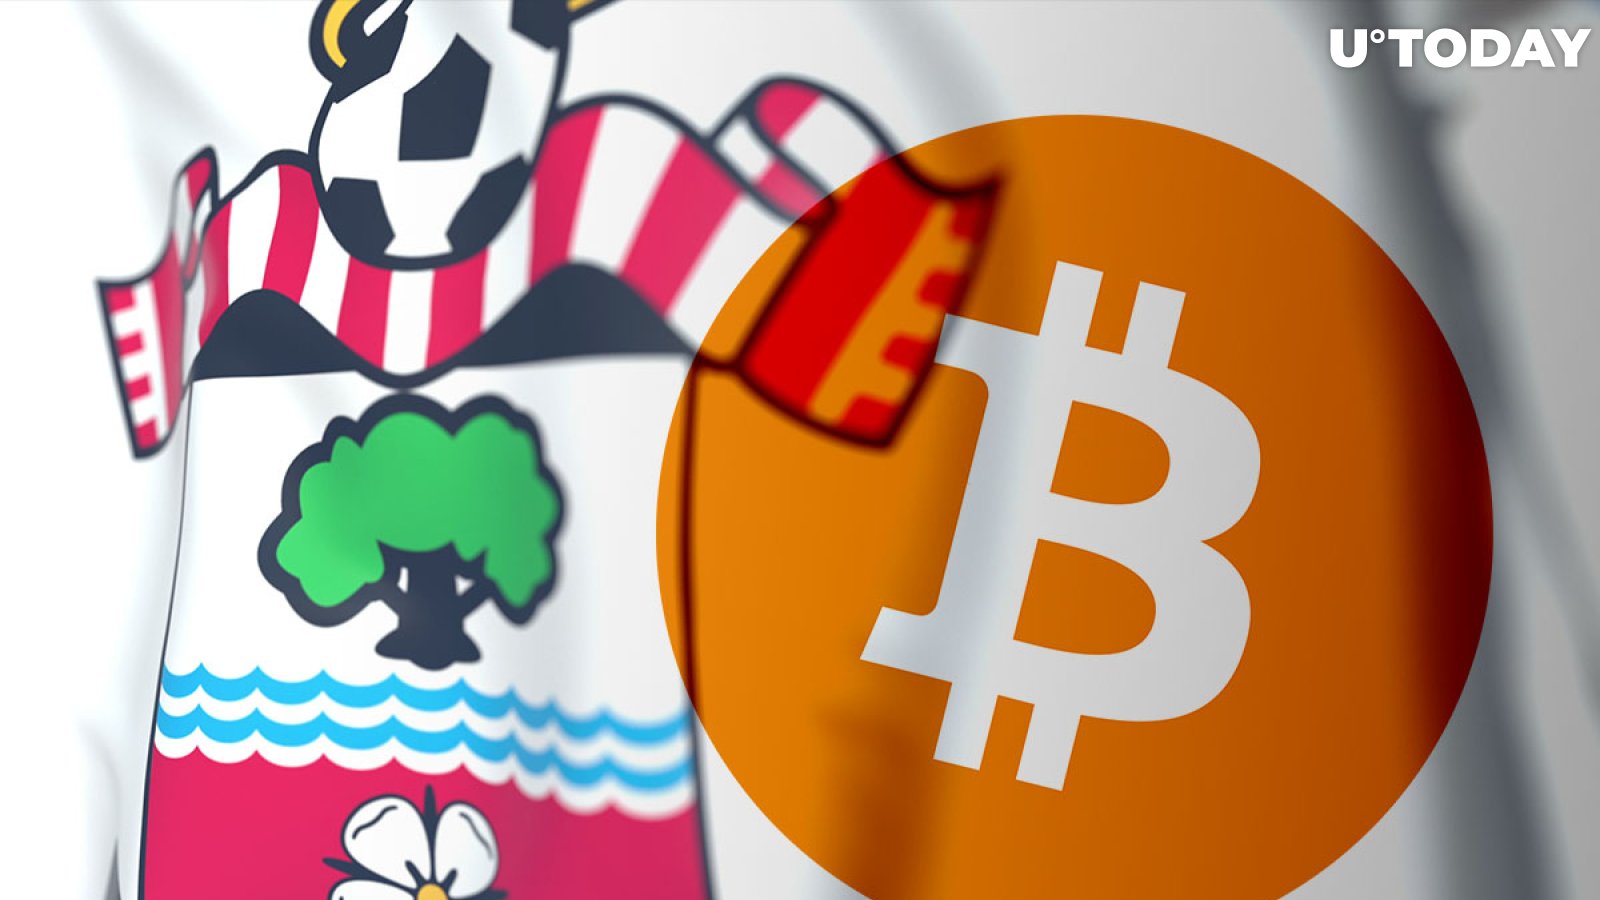 Premier League Football Club Can Now Receive Performance Bonuses in Bitcoin